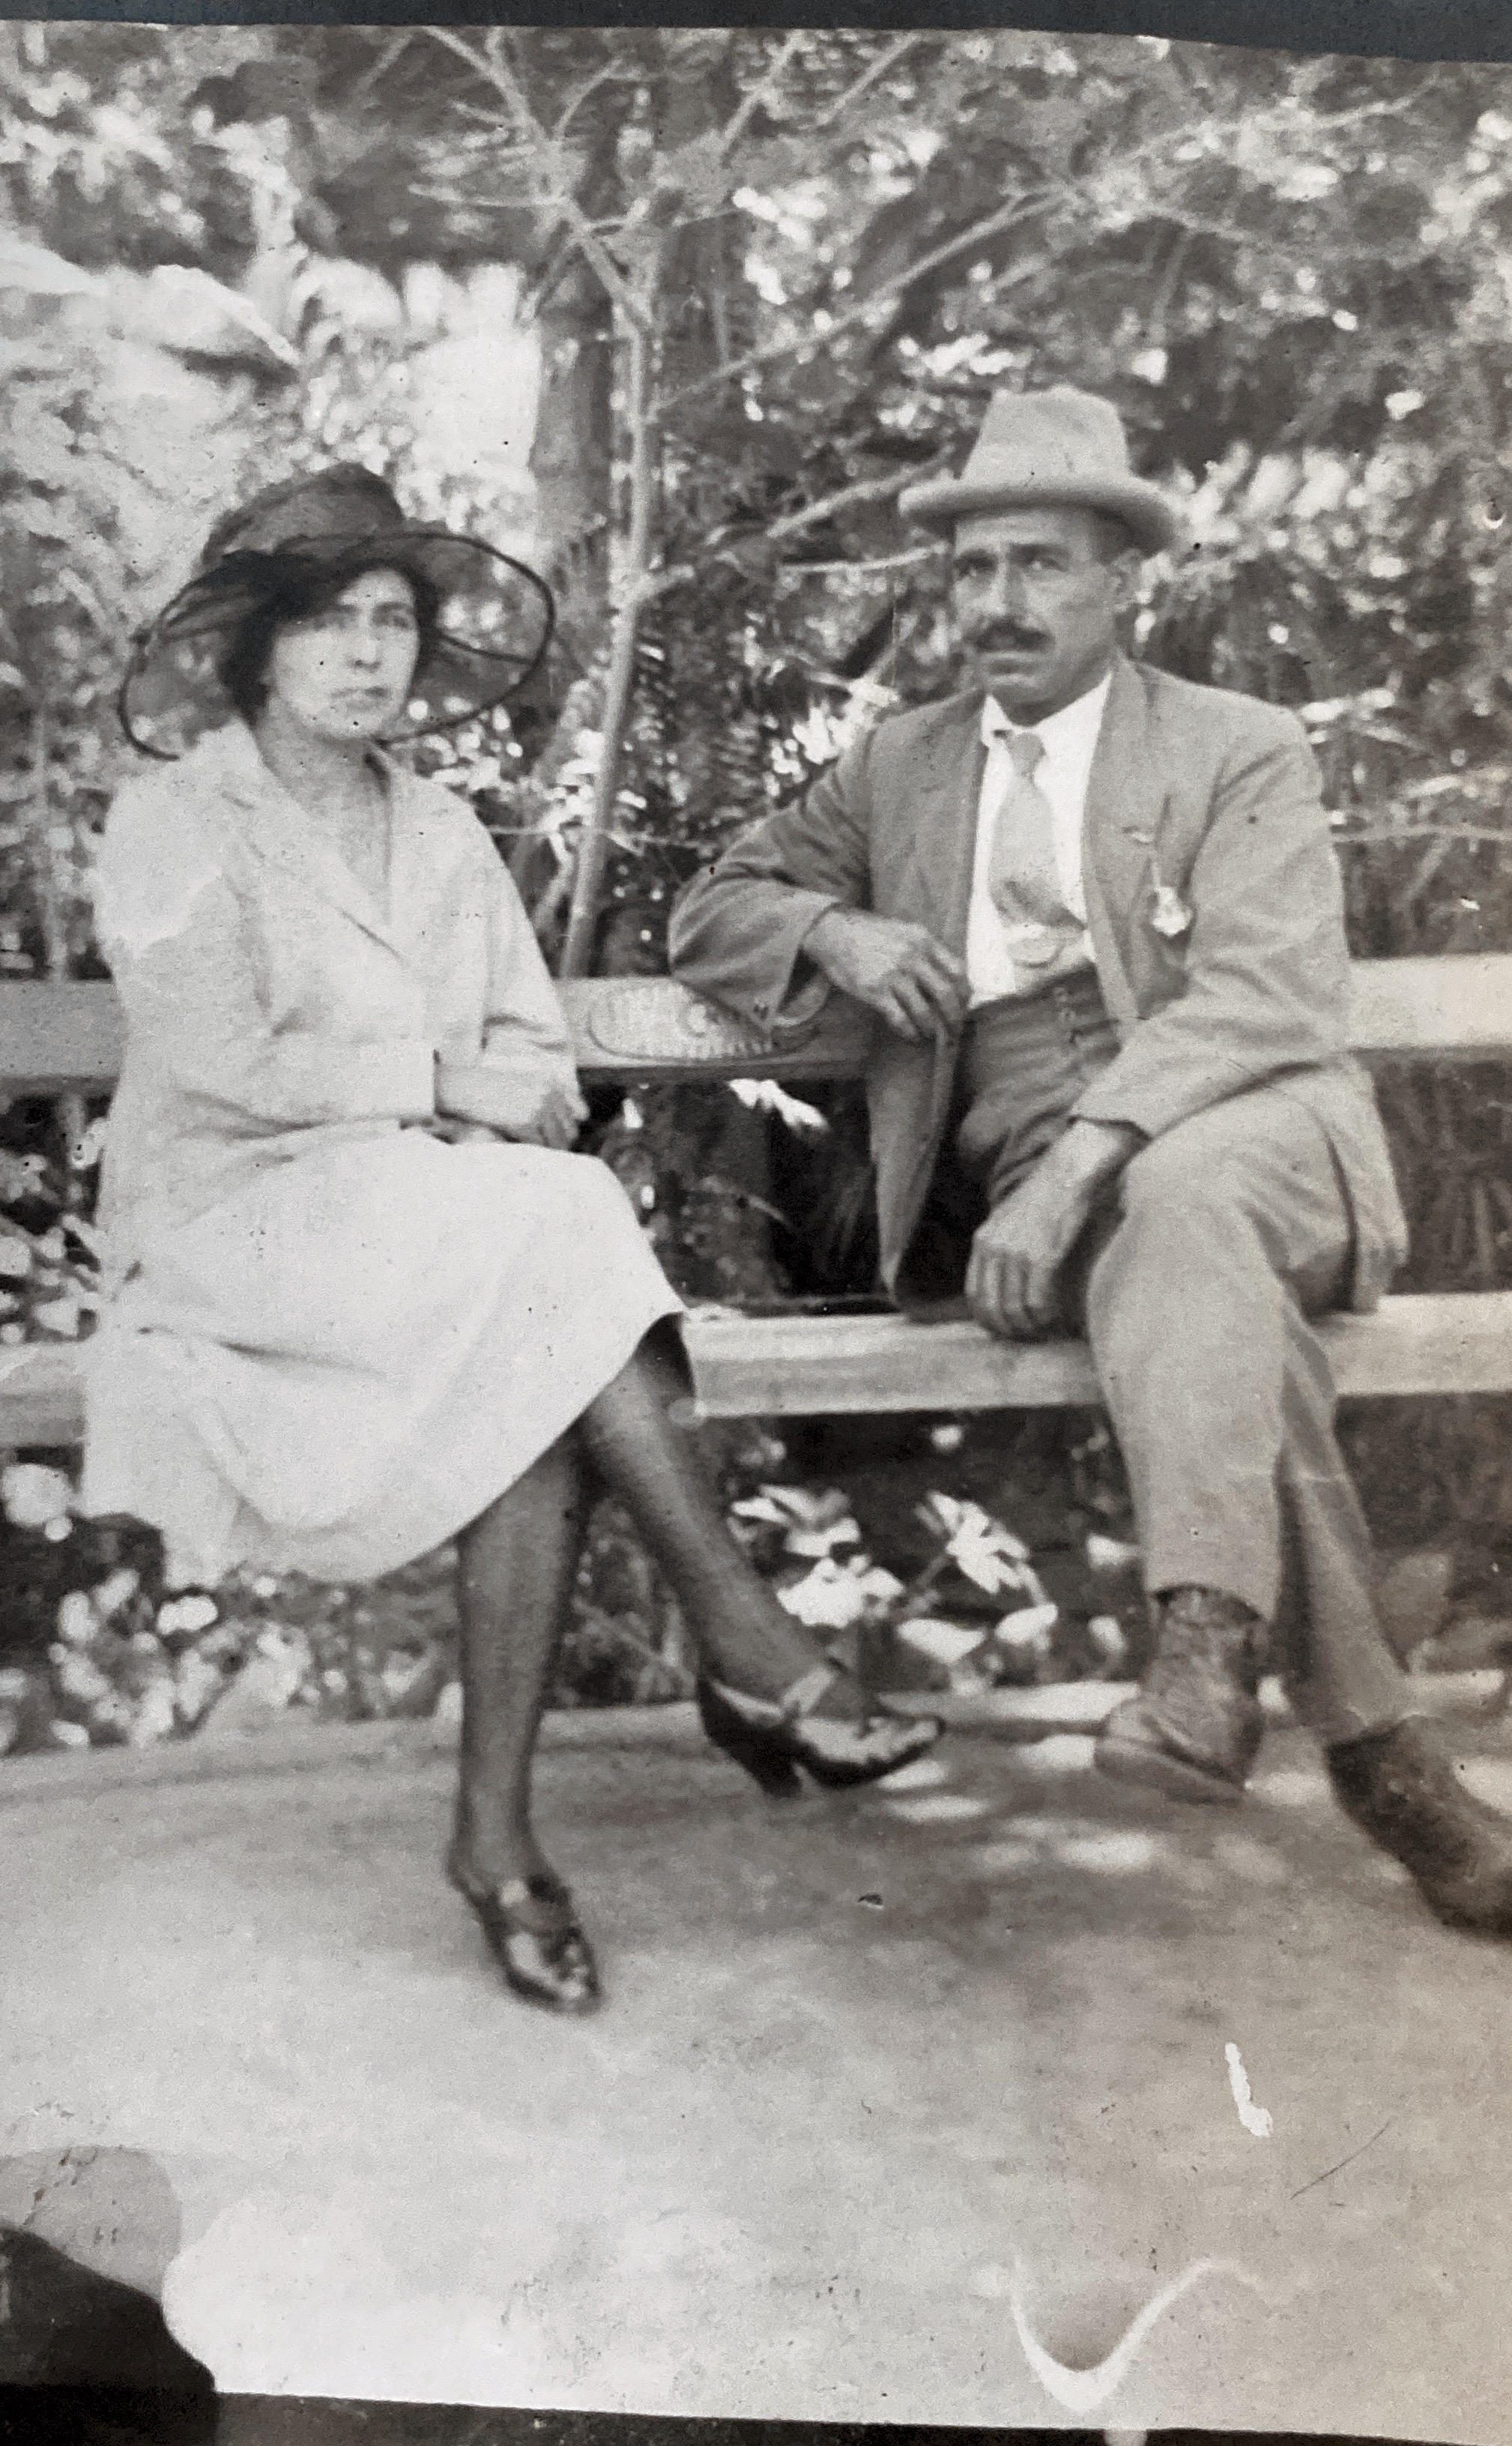 Bisabuelos Juan y Ana
1920